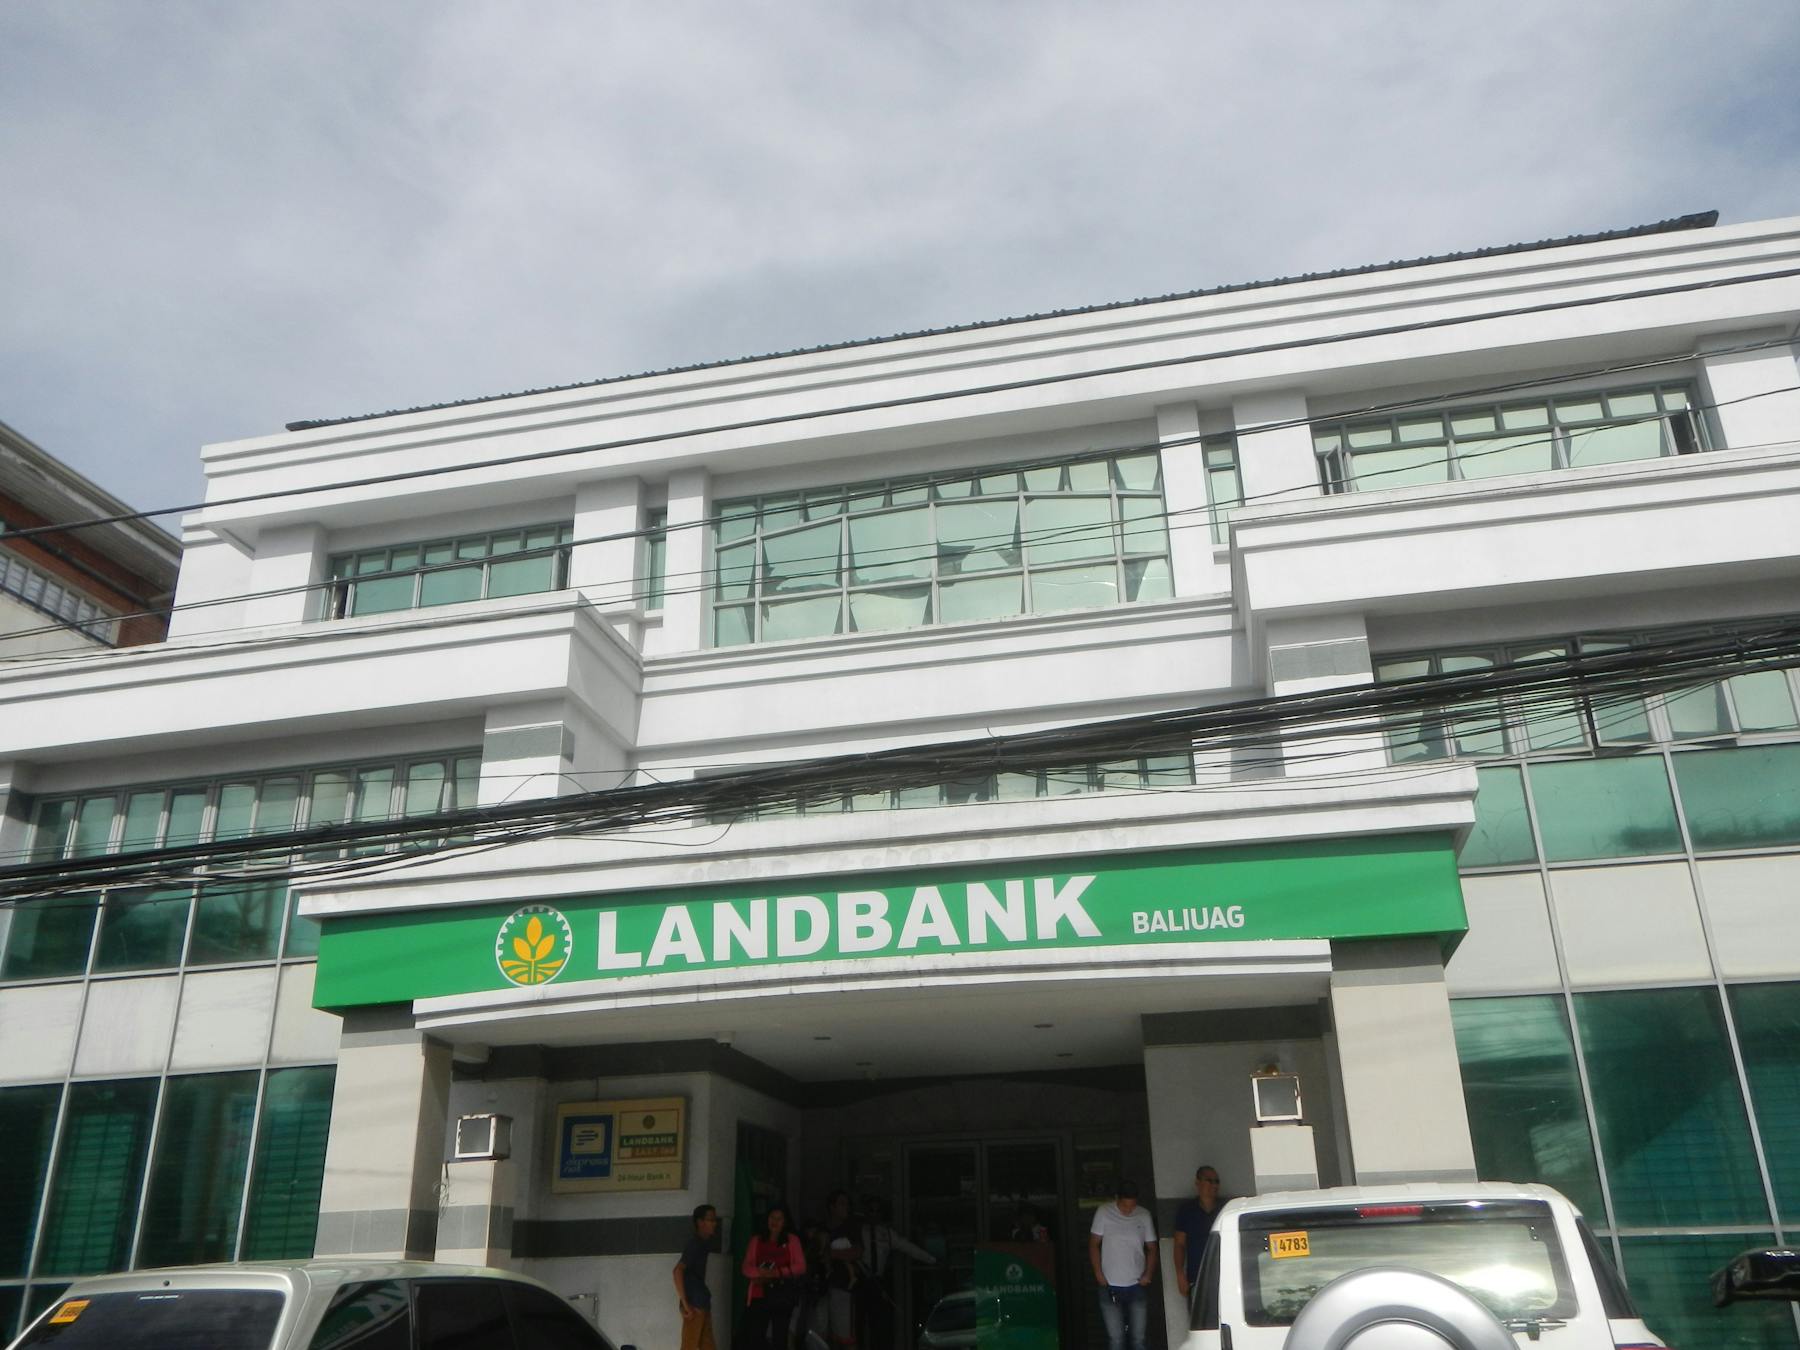 LandBank branch near Baliuag, Philippines